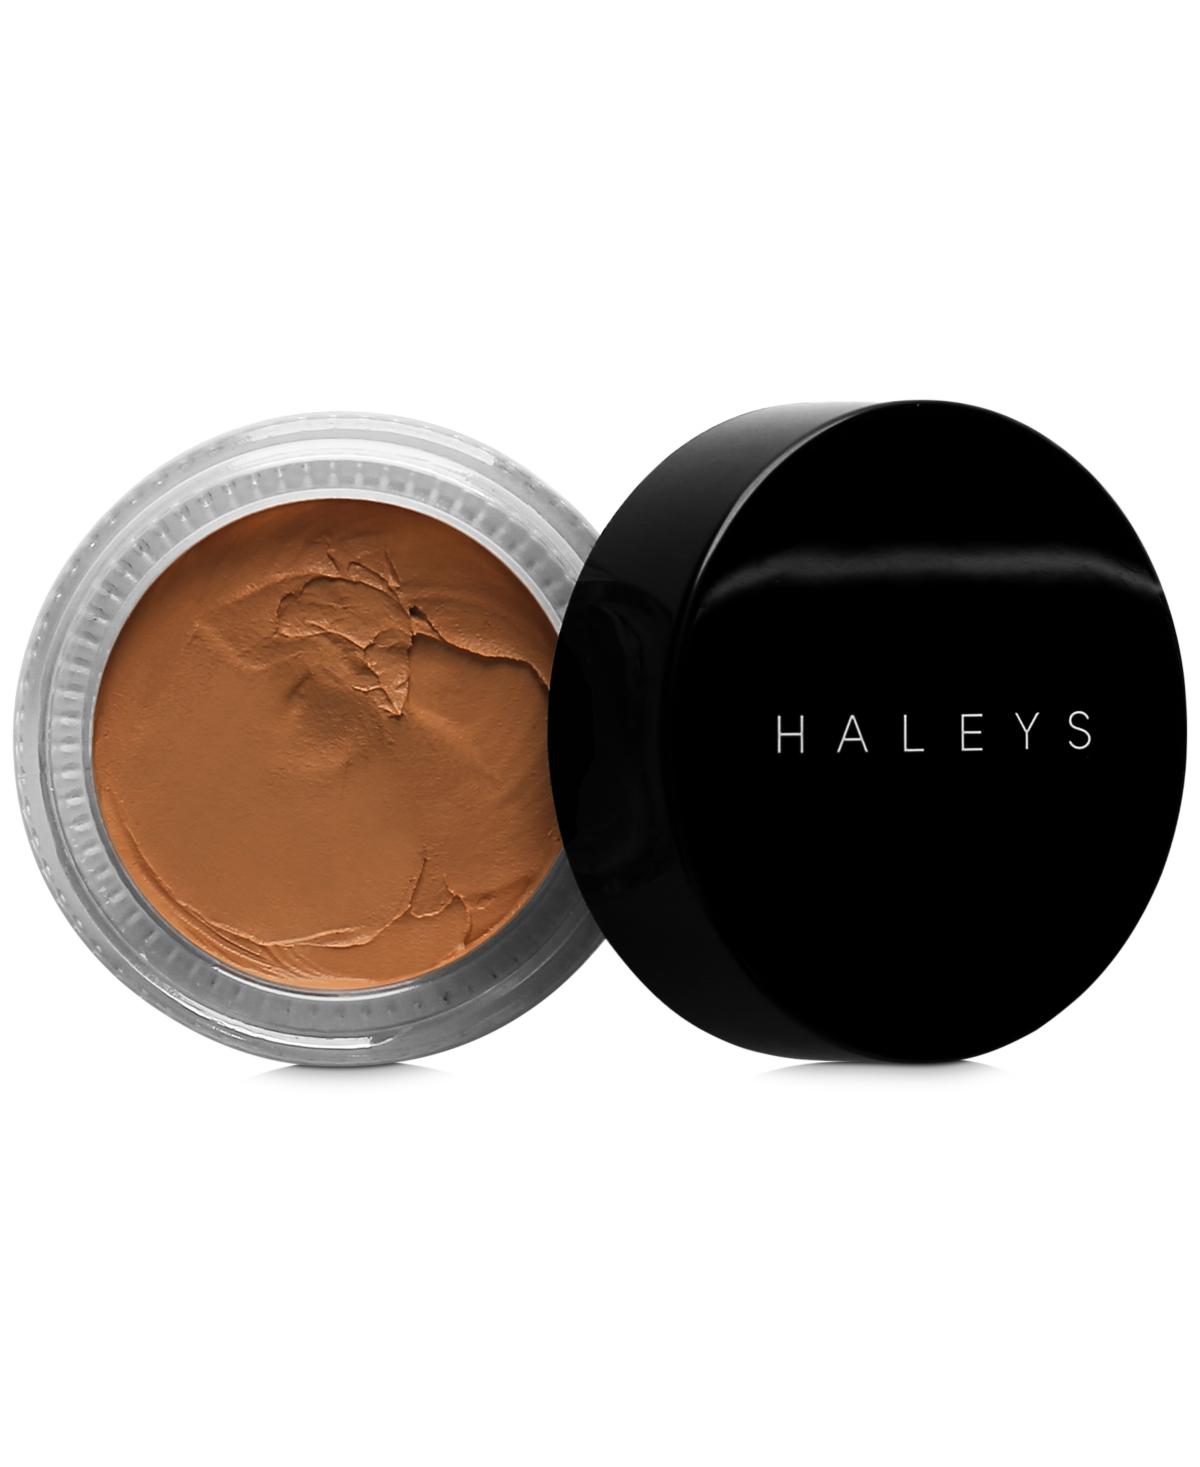 Haleys Beauty Re:Veal Mousse Makeup